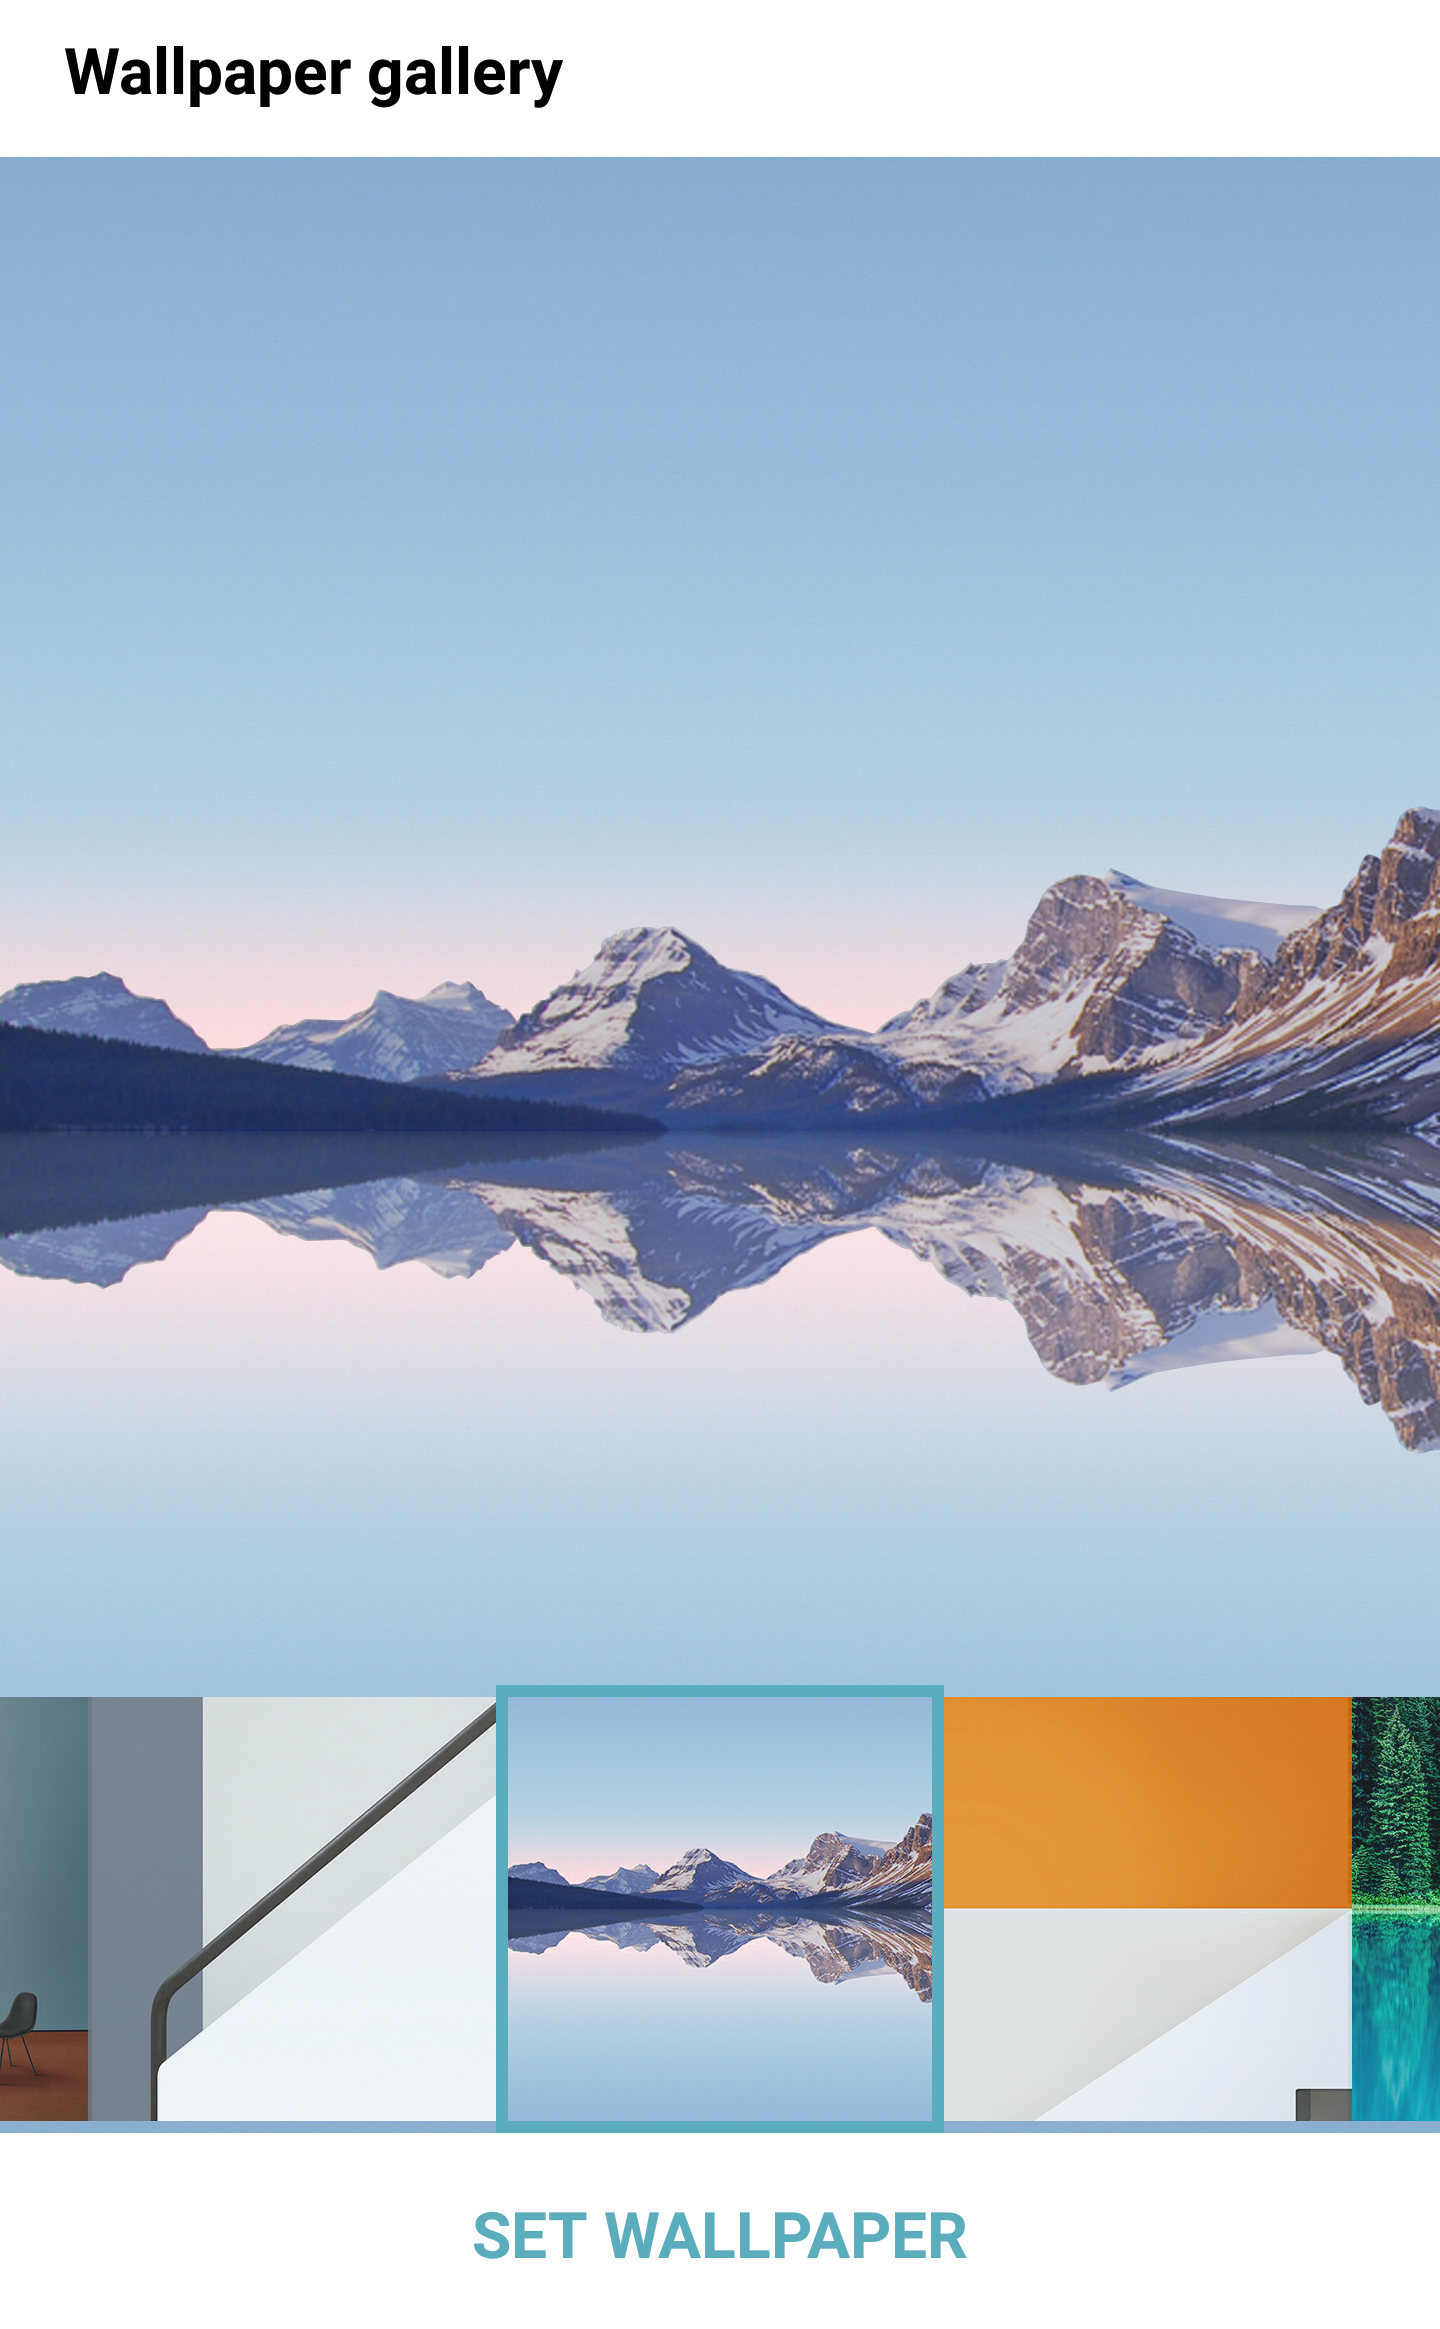 changeable wallpaper,sky,blue,mountain,mountainous landforms,mountain range